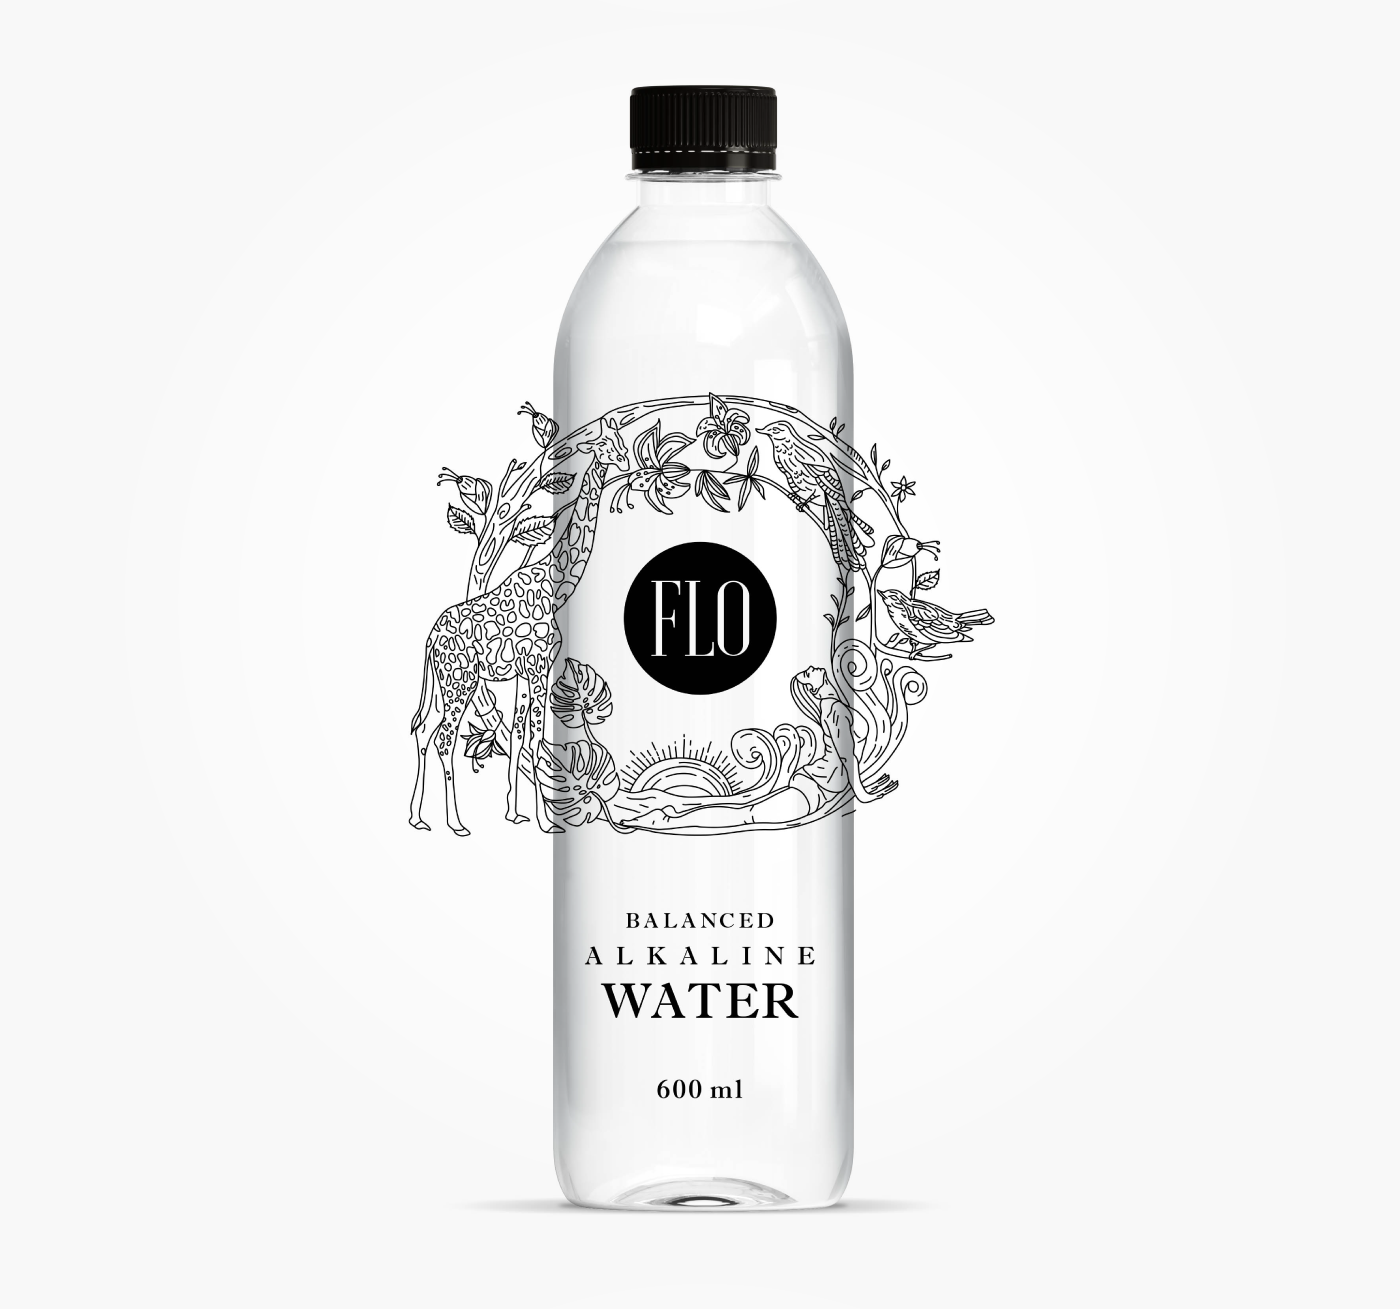 water bottle brand flo Packaging design ILLUSTRATION  naming strategy reformer